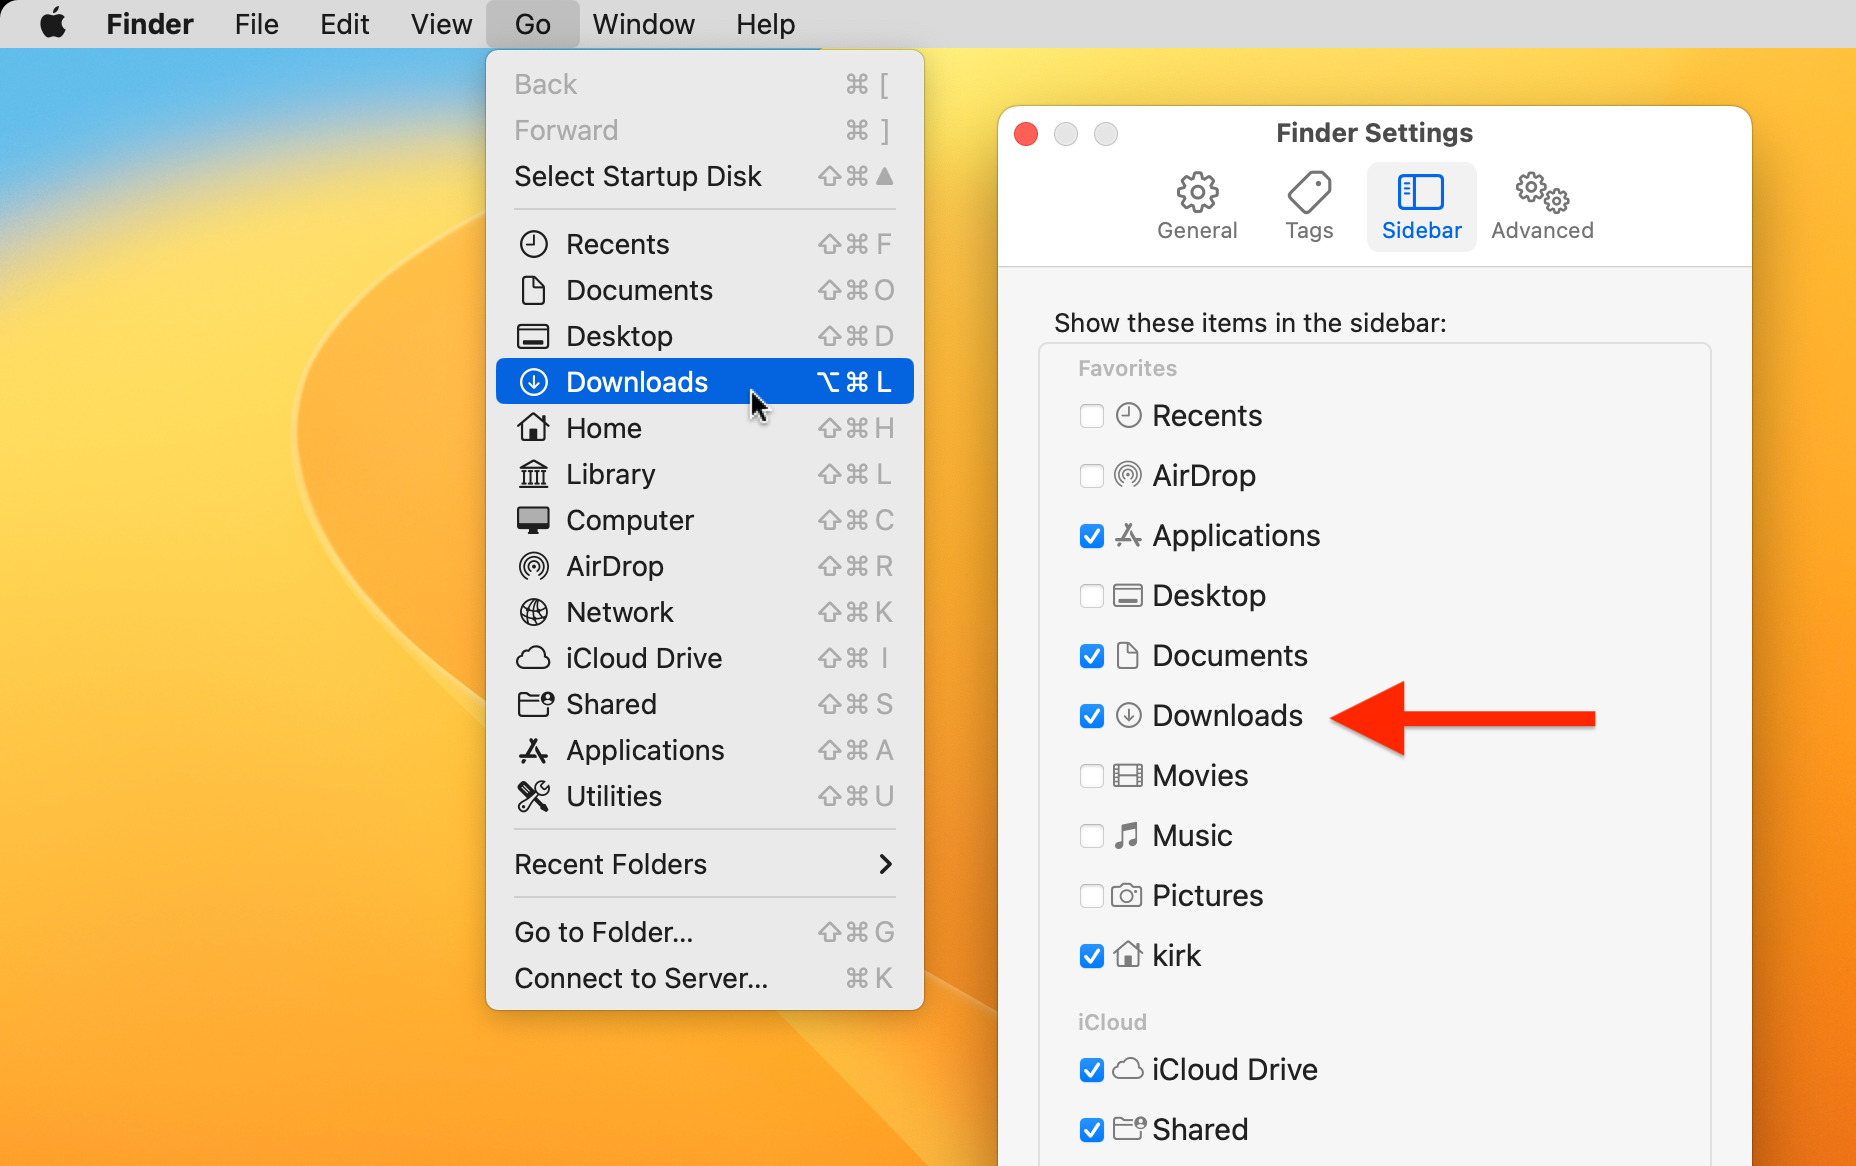 hente Politistation motivet A Newbie's Guide to Using the Mac Downloads Folder - The Mac Security Blog